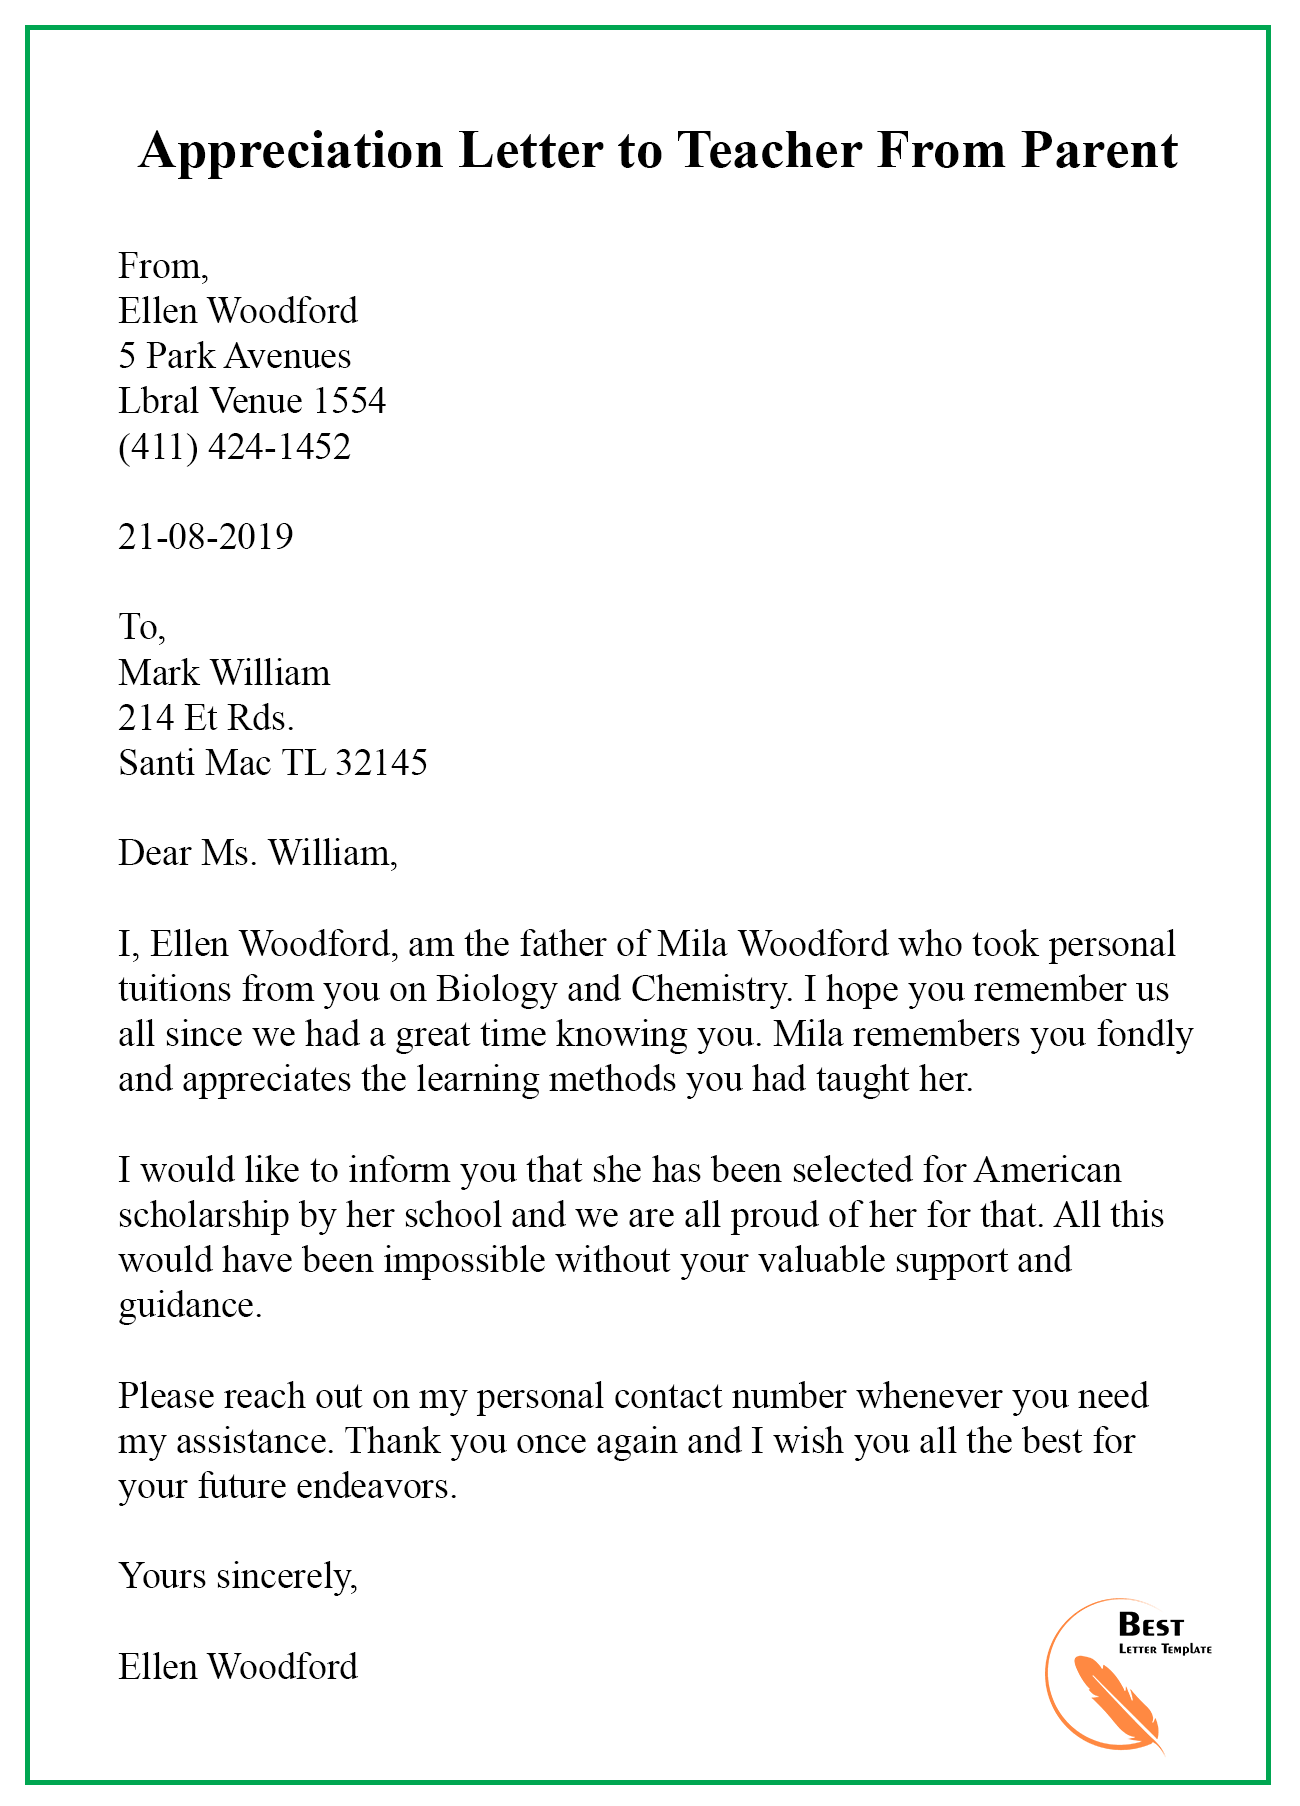 teacher-appreciation-letter-template